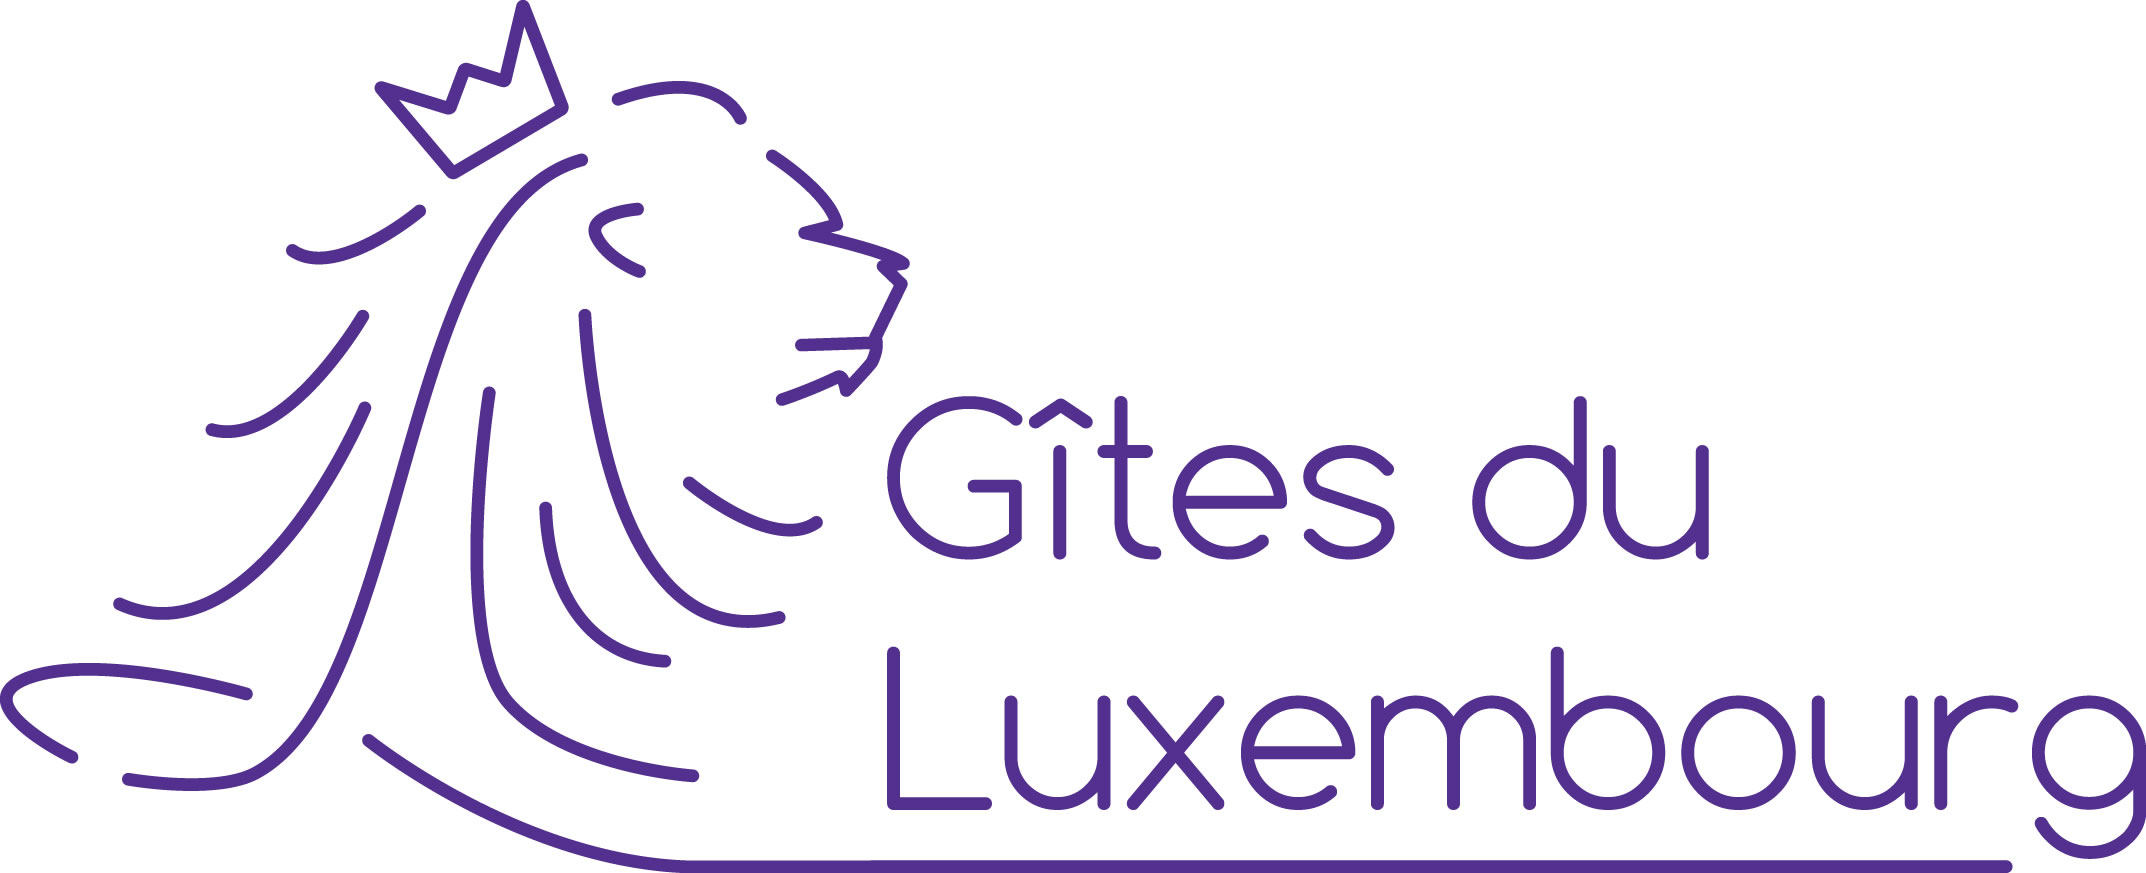 Gites Luxembourg